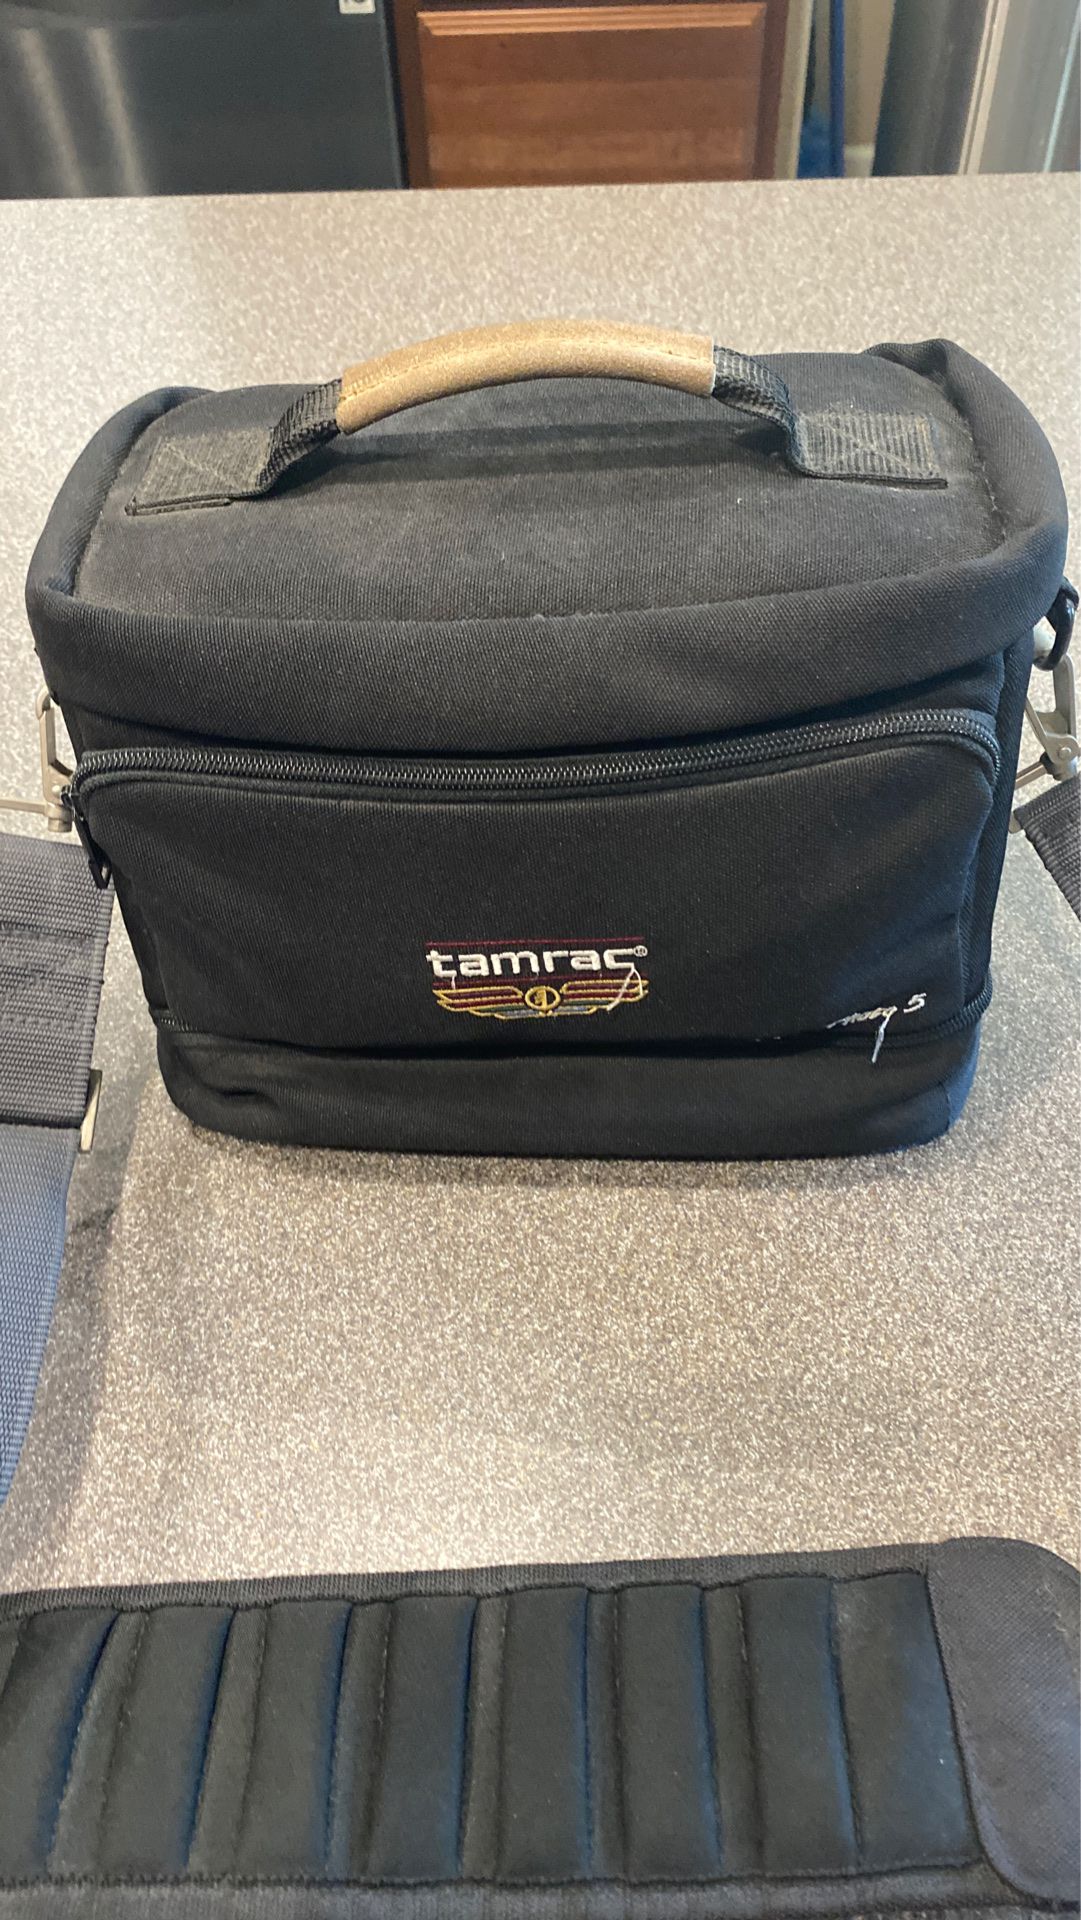 Tamrac Camera bags